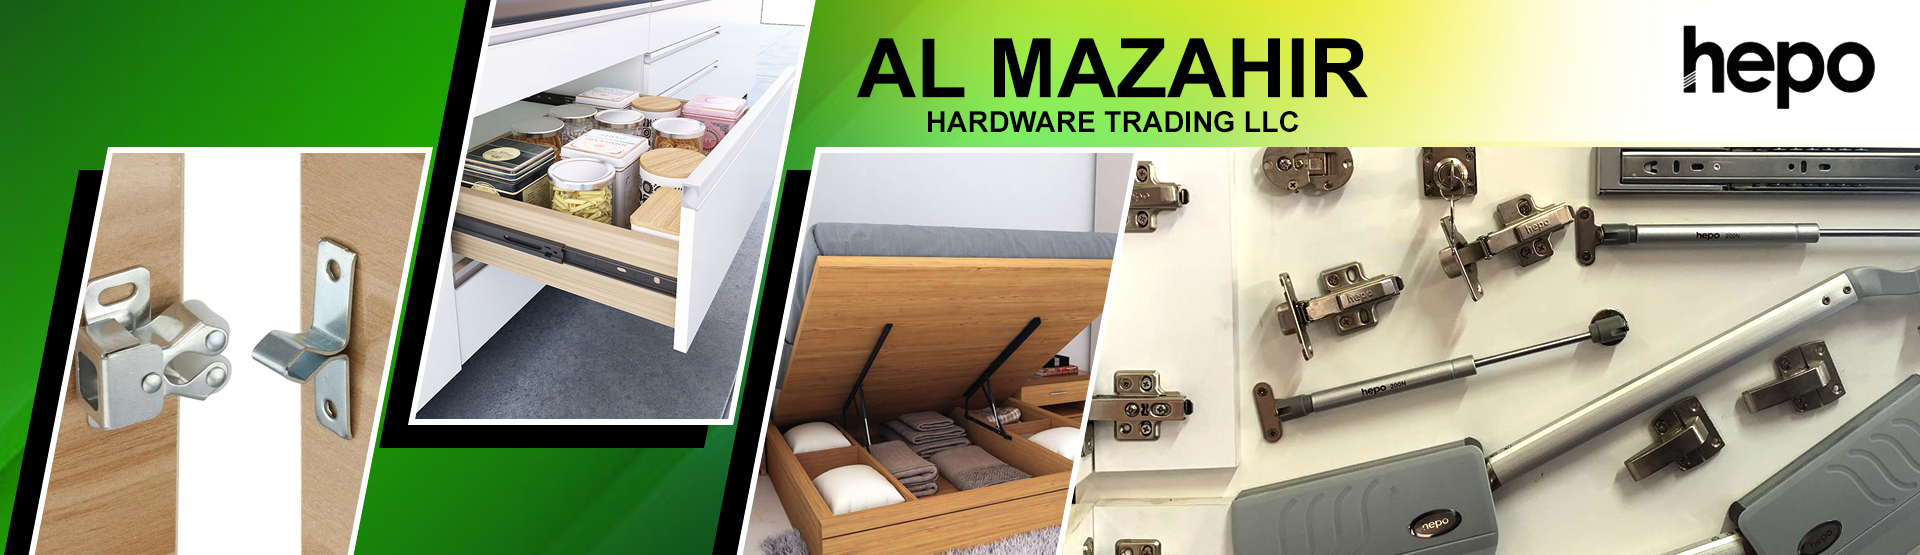 AL MAZAHIR HARDWARE TRADING LLC